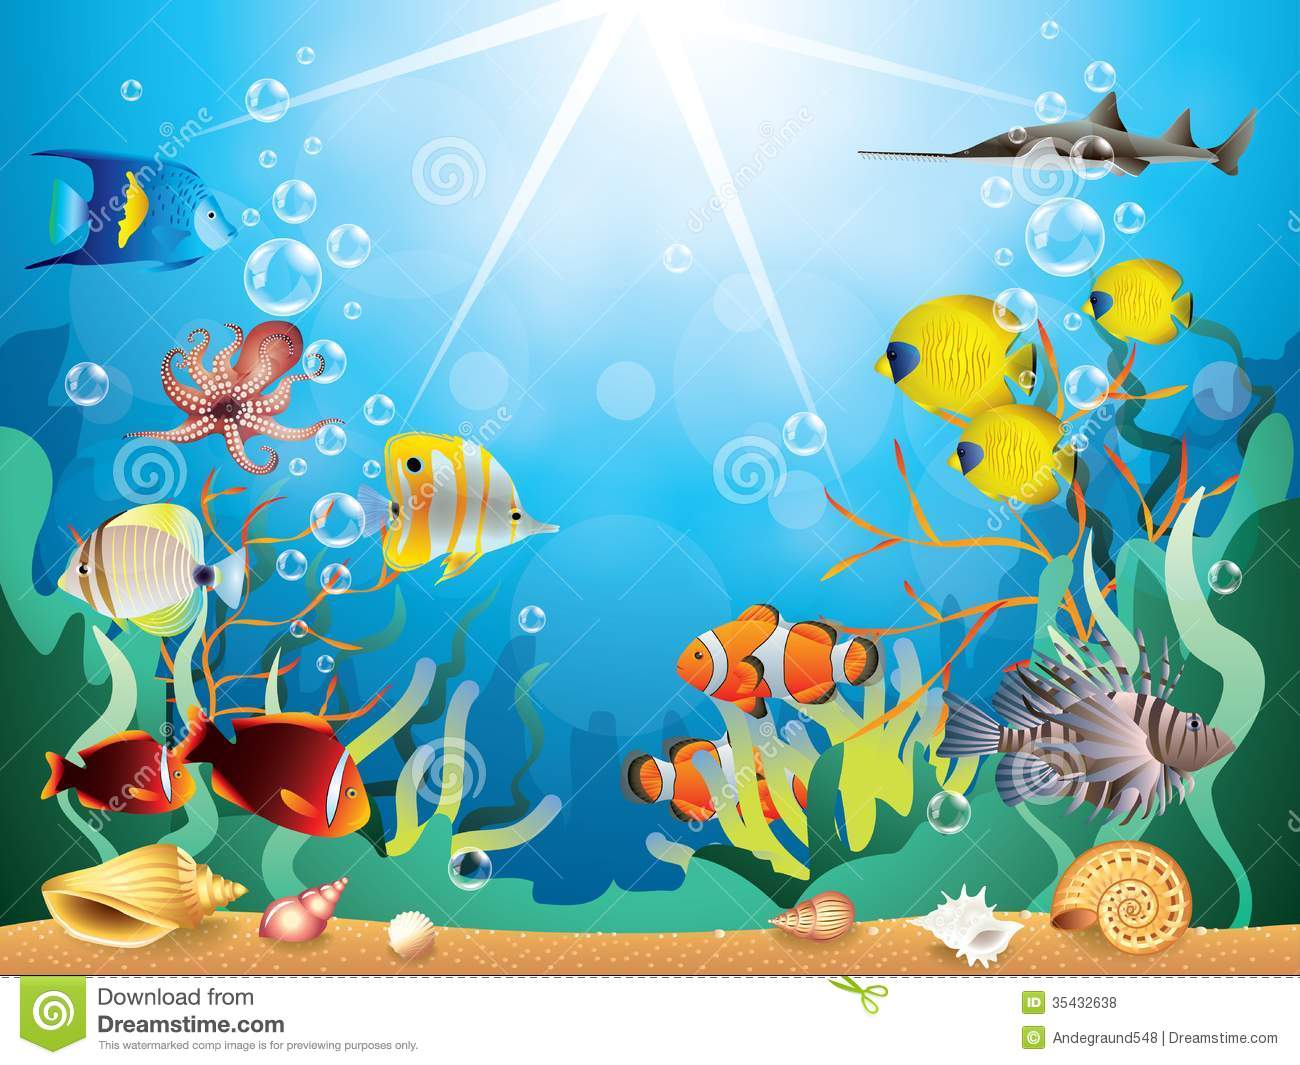 Underwater World Vector Illustration Royalty Free Stock Photos   Image